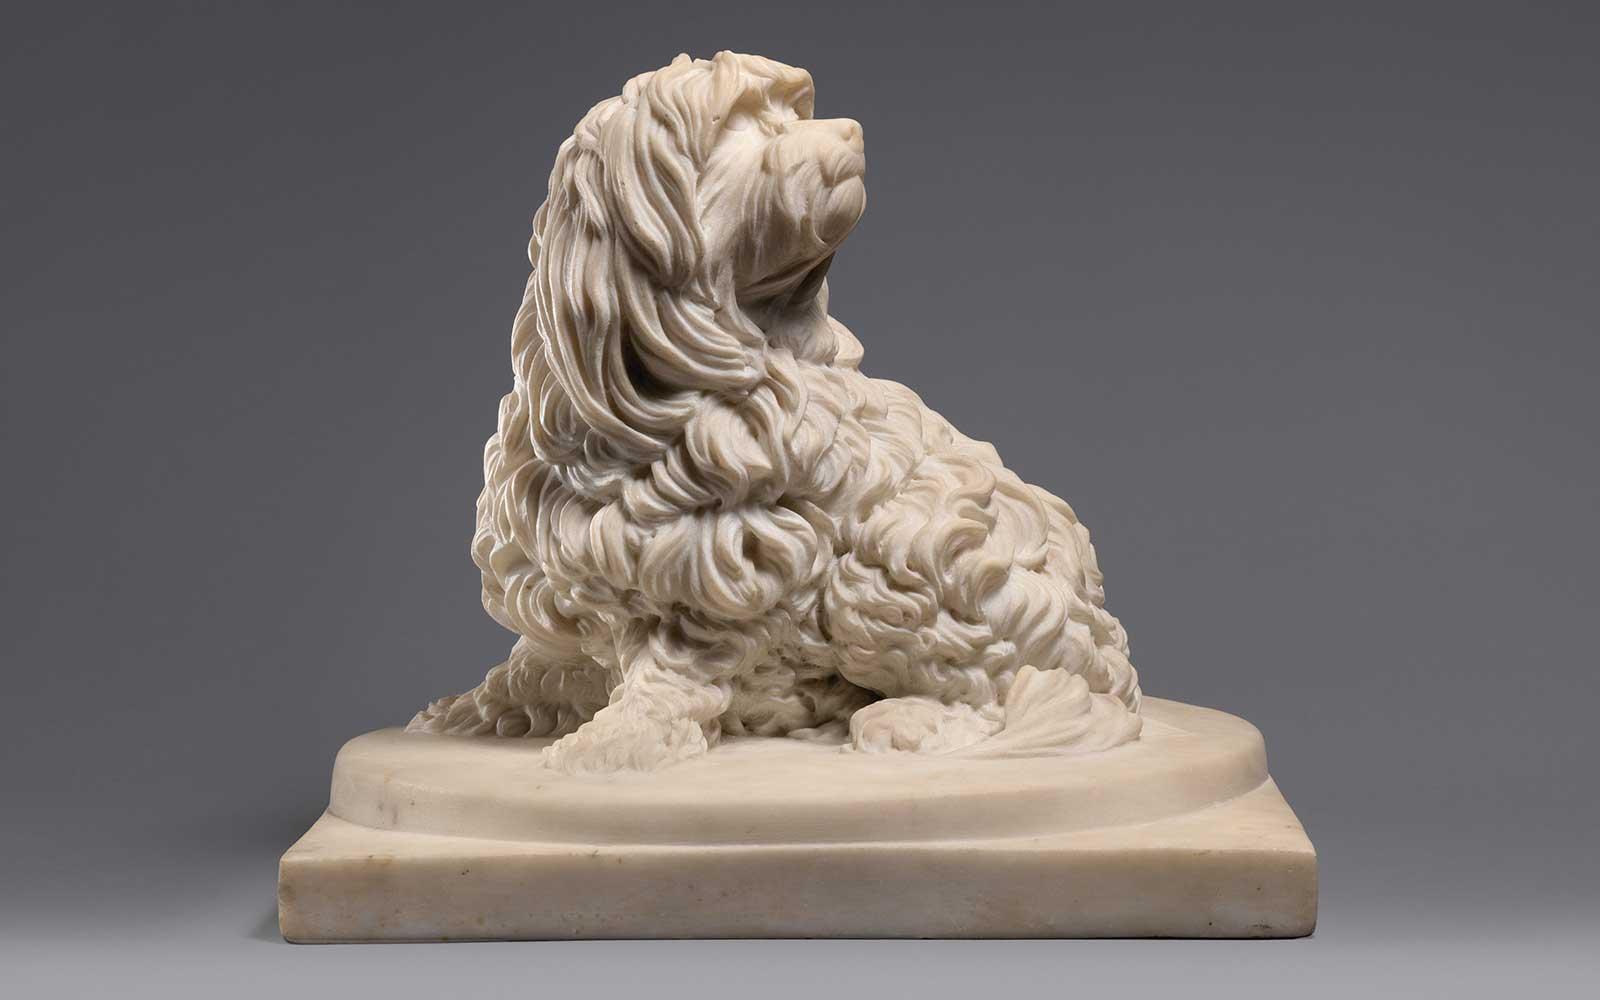 Anne Seymour Damer, Shock Dog (nickname for a dog of the Maltese breed), 1782.